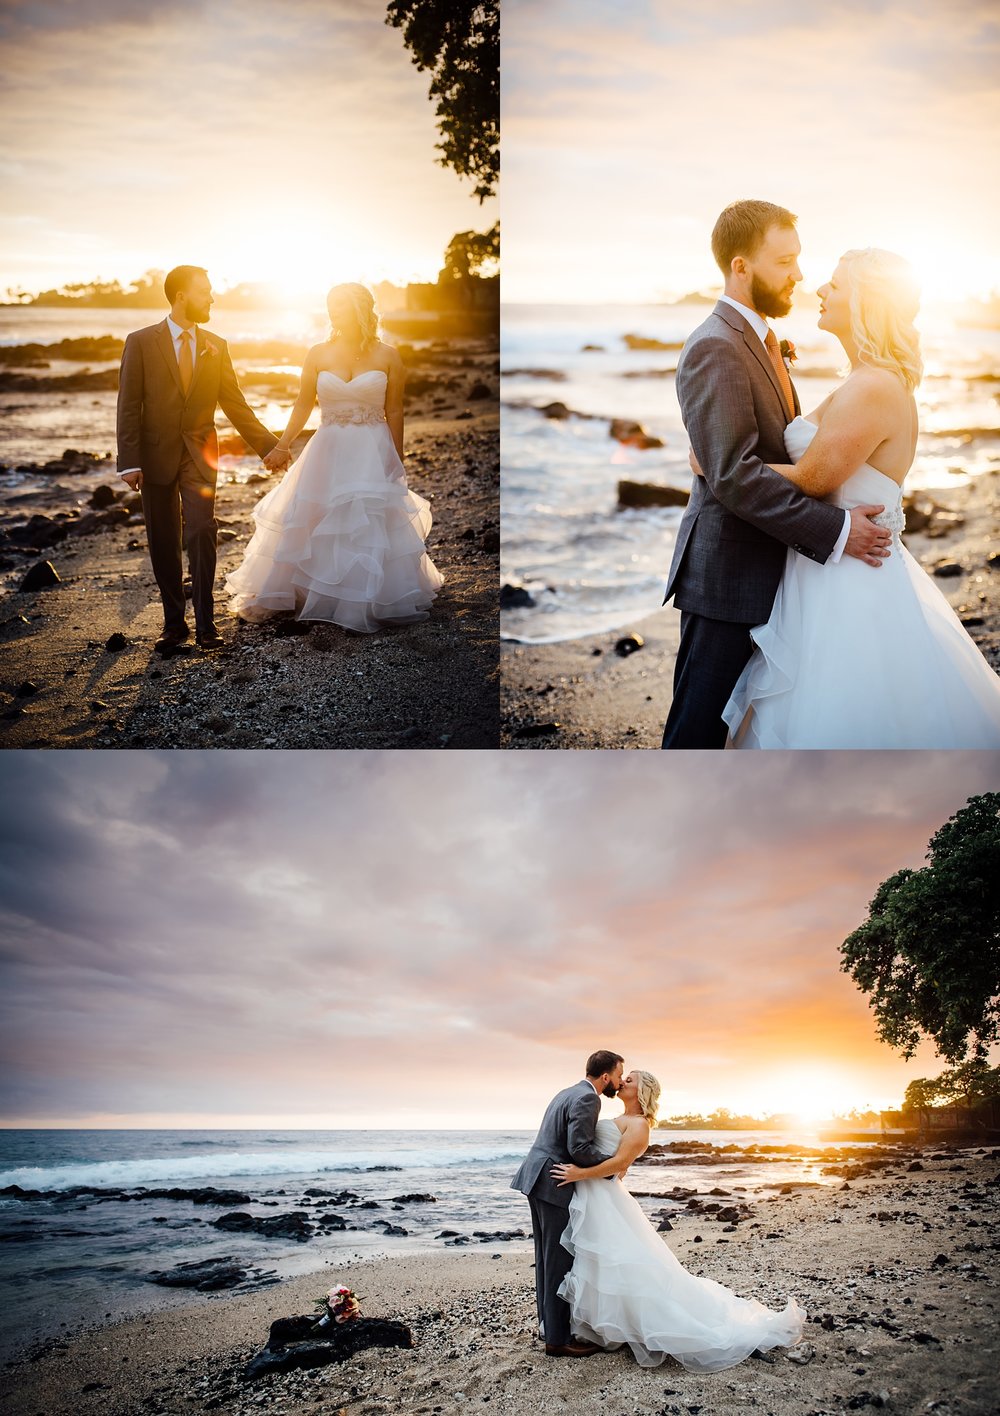 Bride and groom on wedding day in hawaii